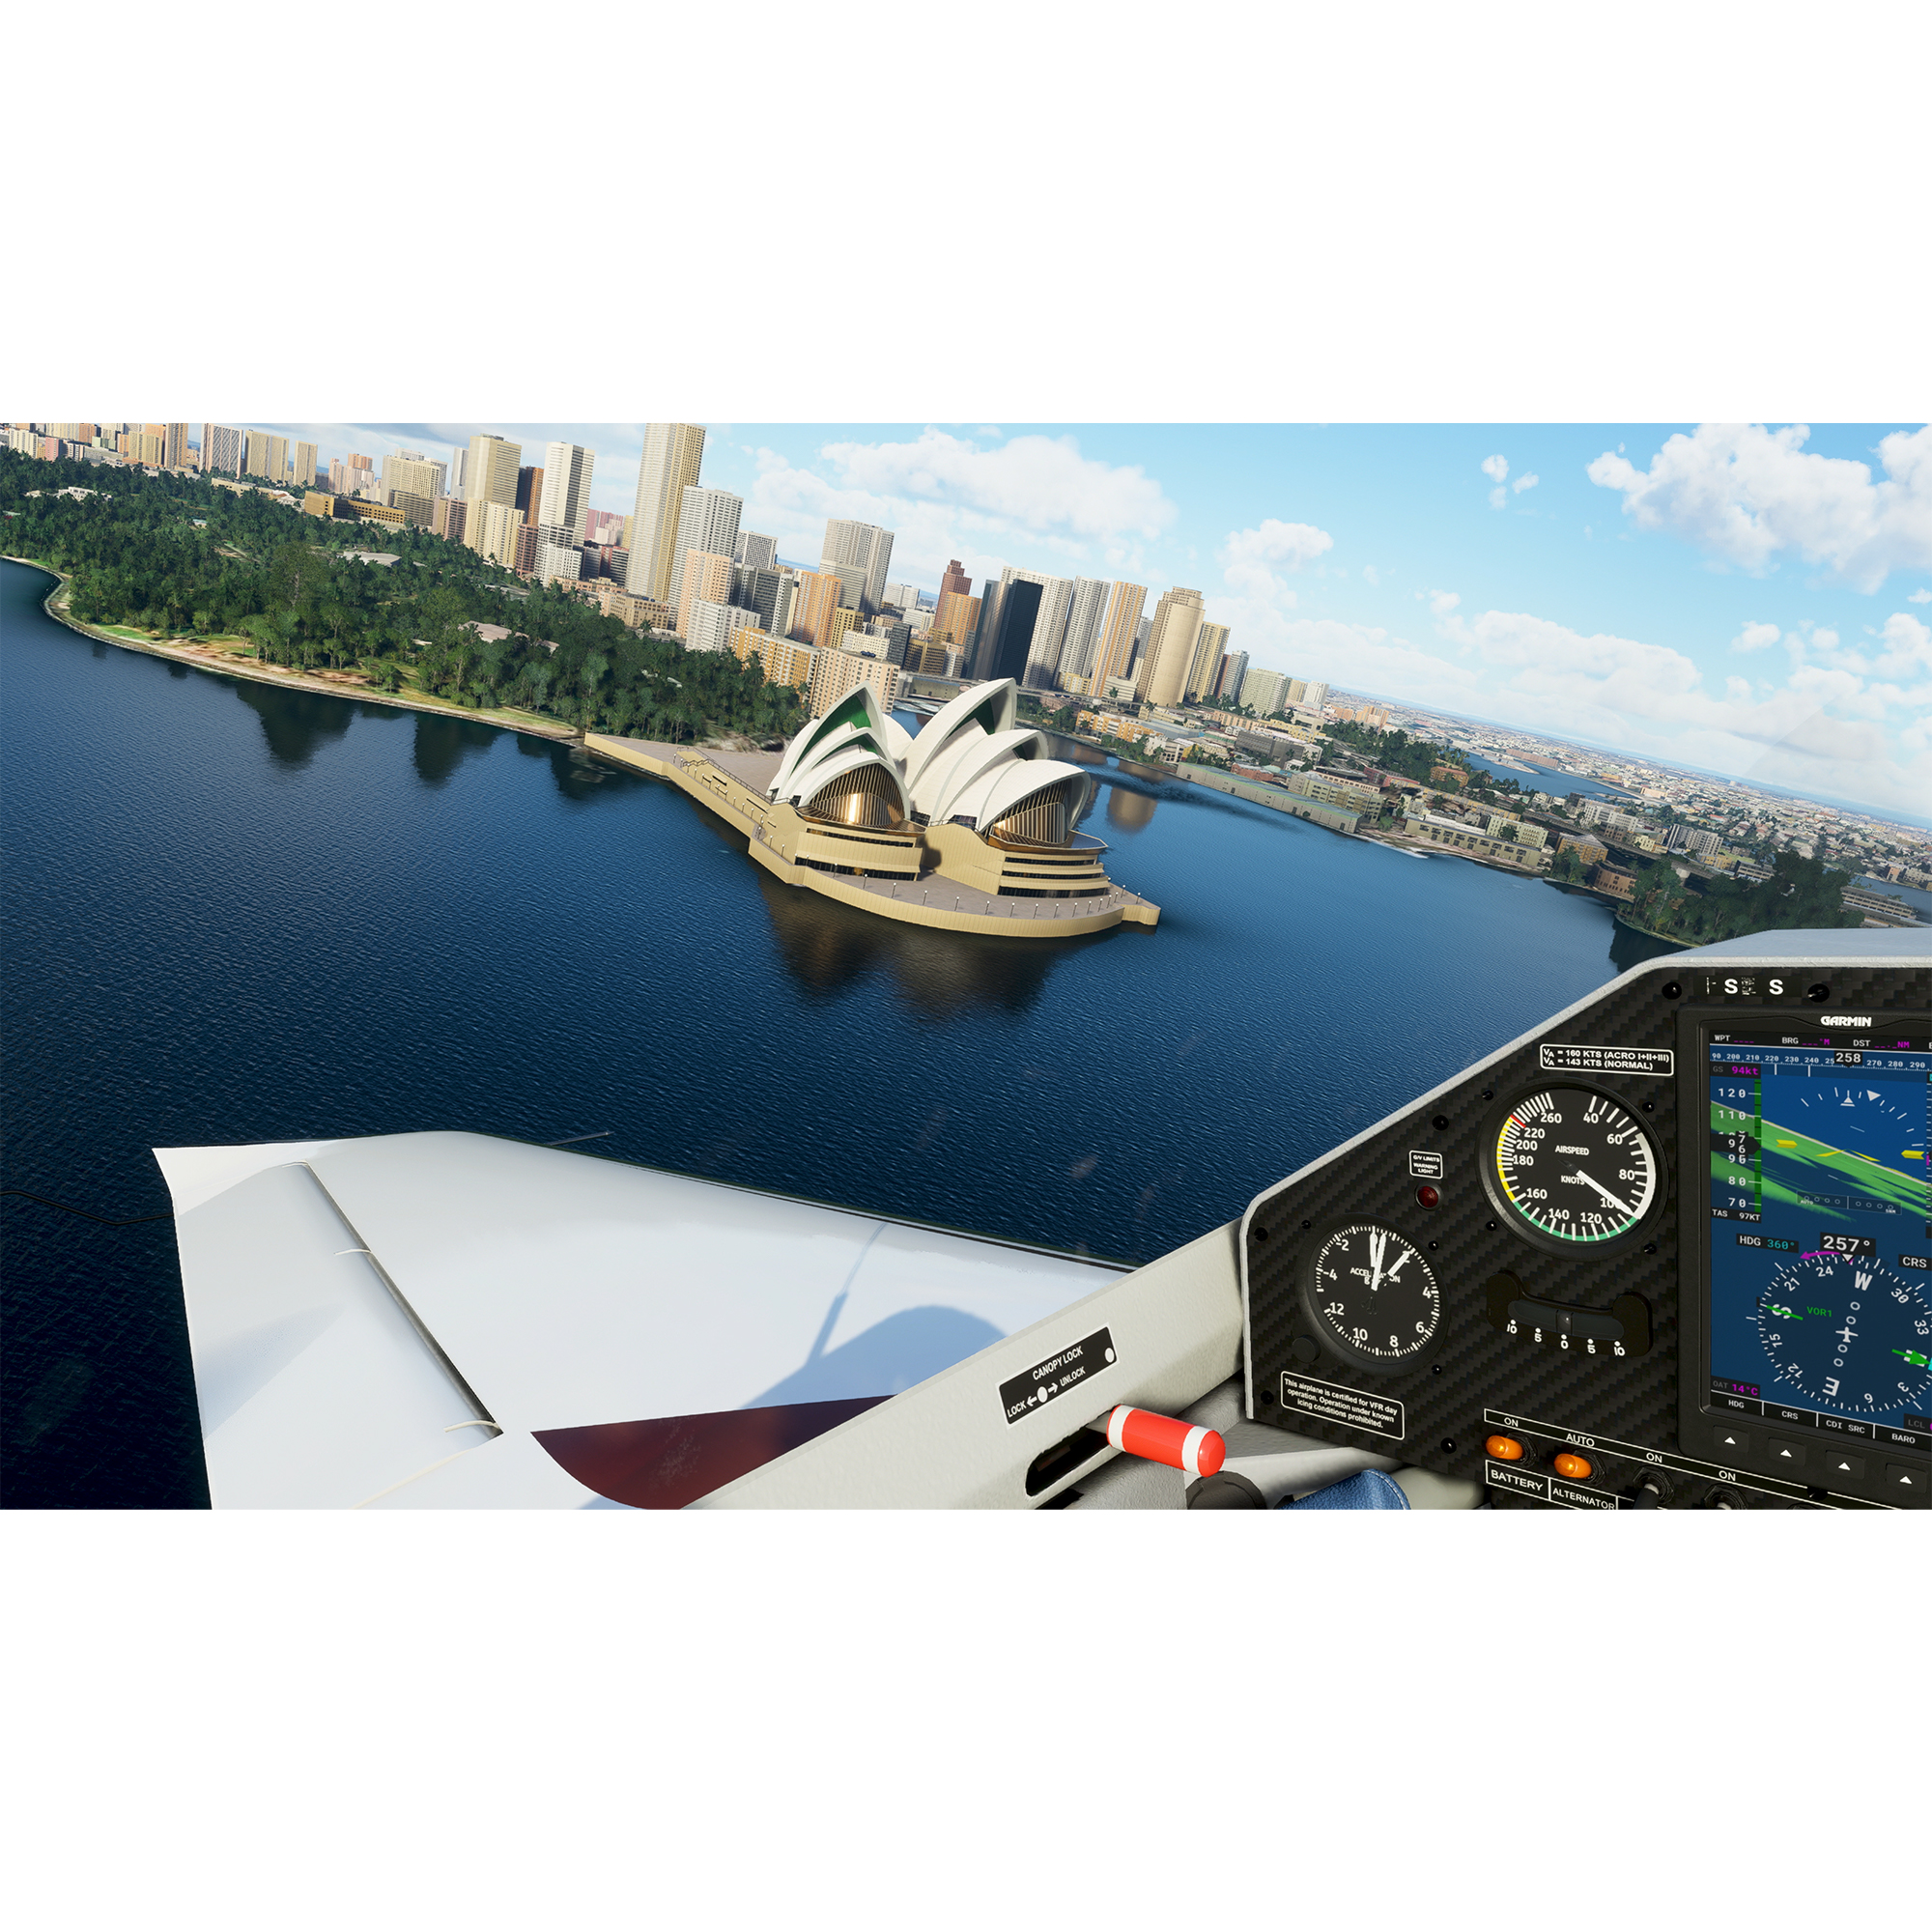 Flight Simulator Standard Edition Xbox Series X 8J6-00001 - Best Buy